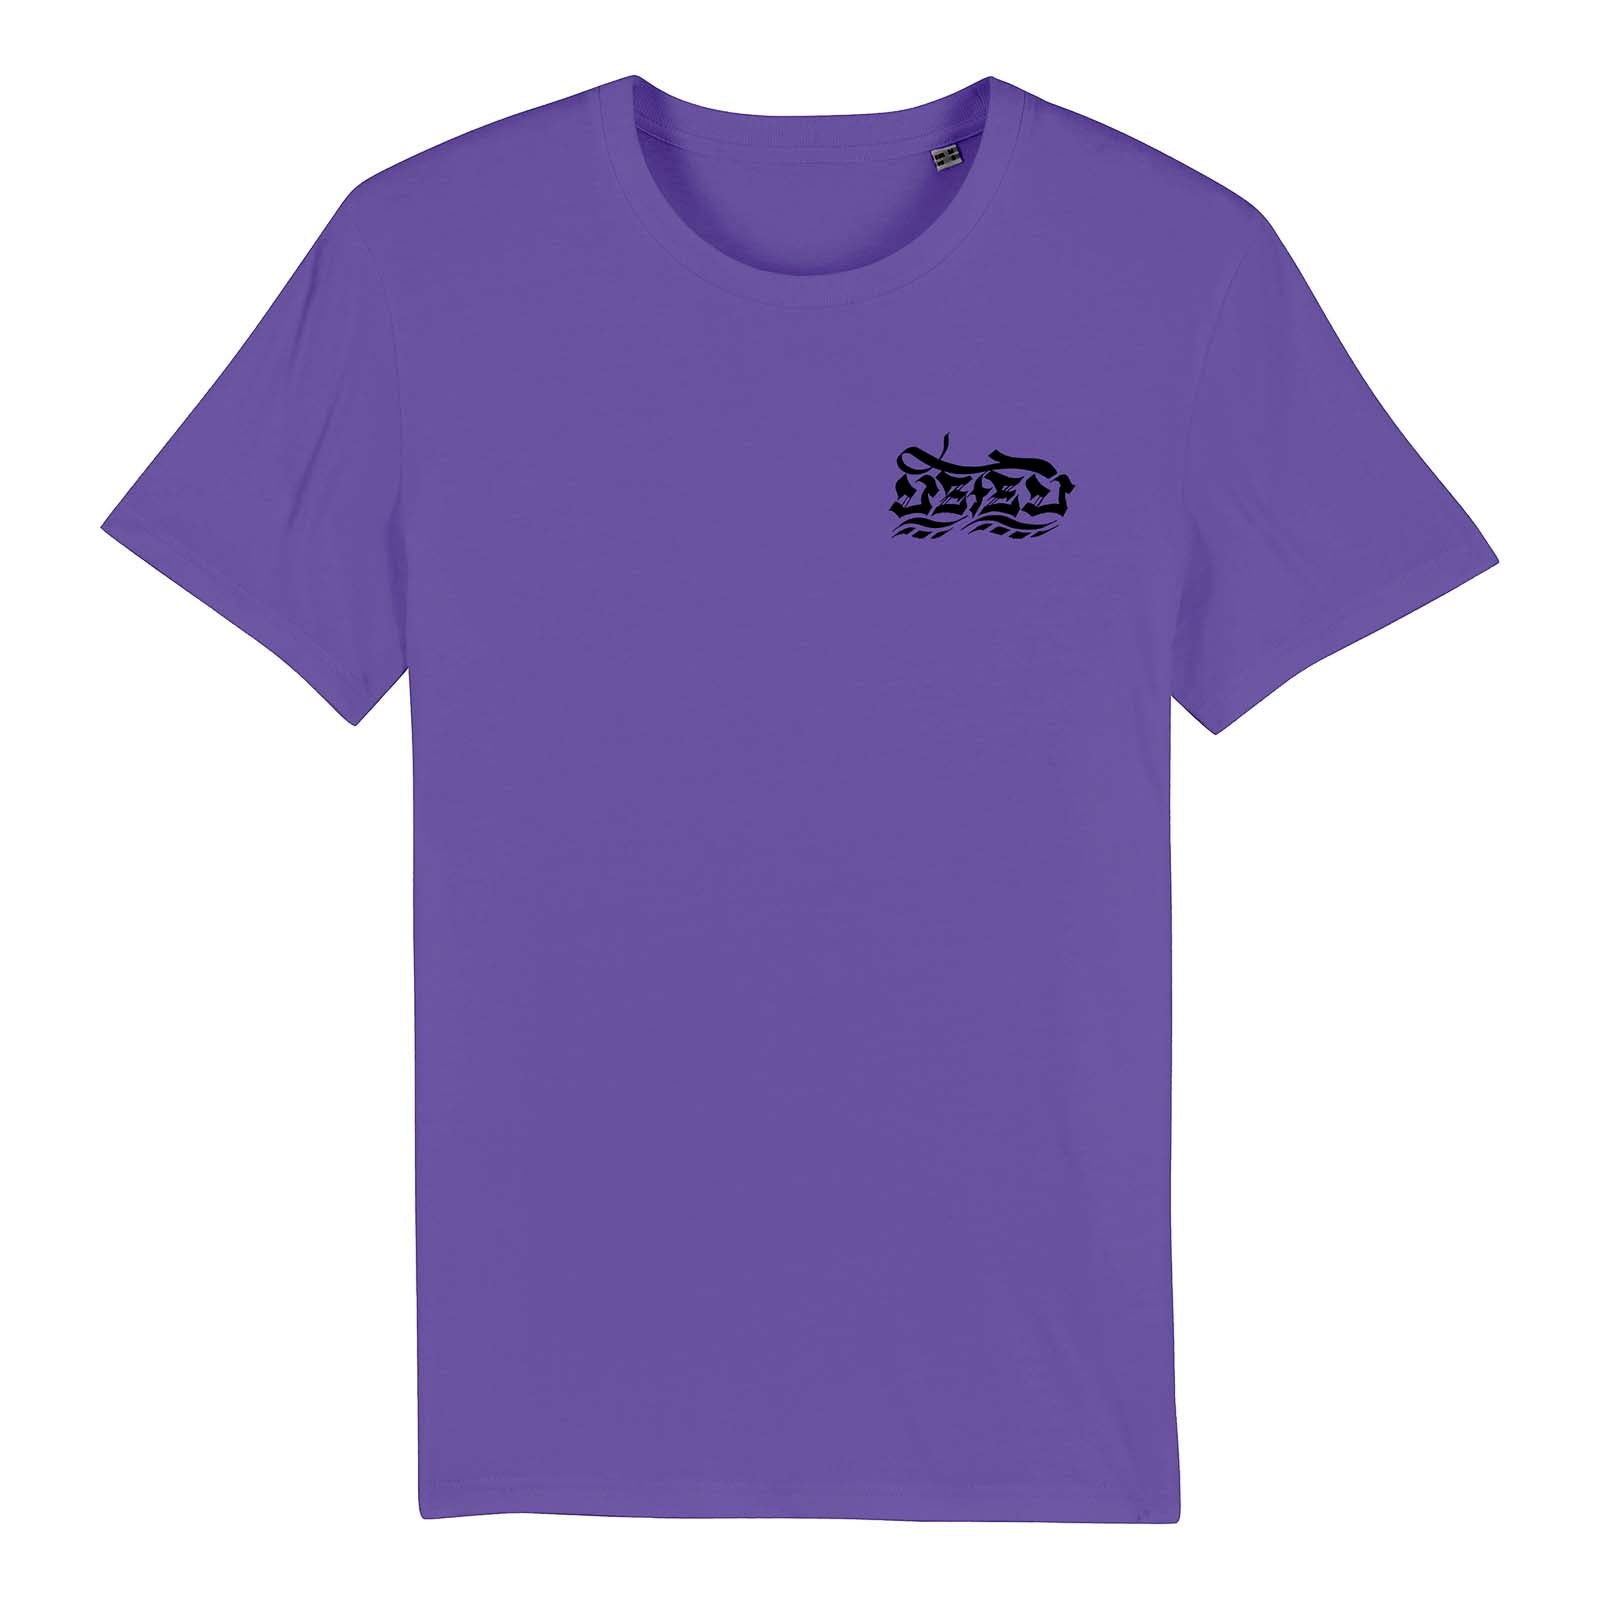 Purple Tshirt with Good Stuff print front